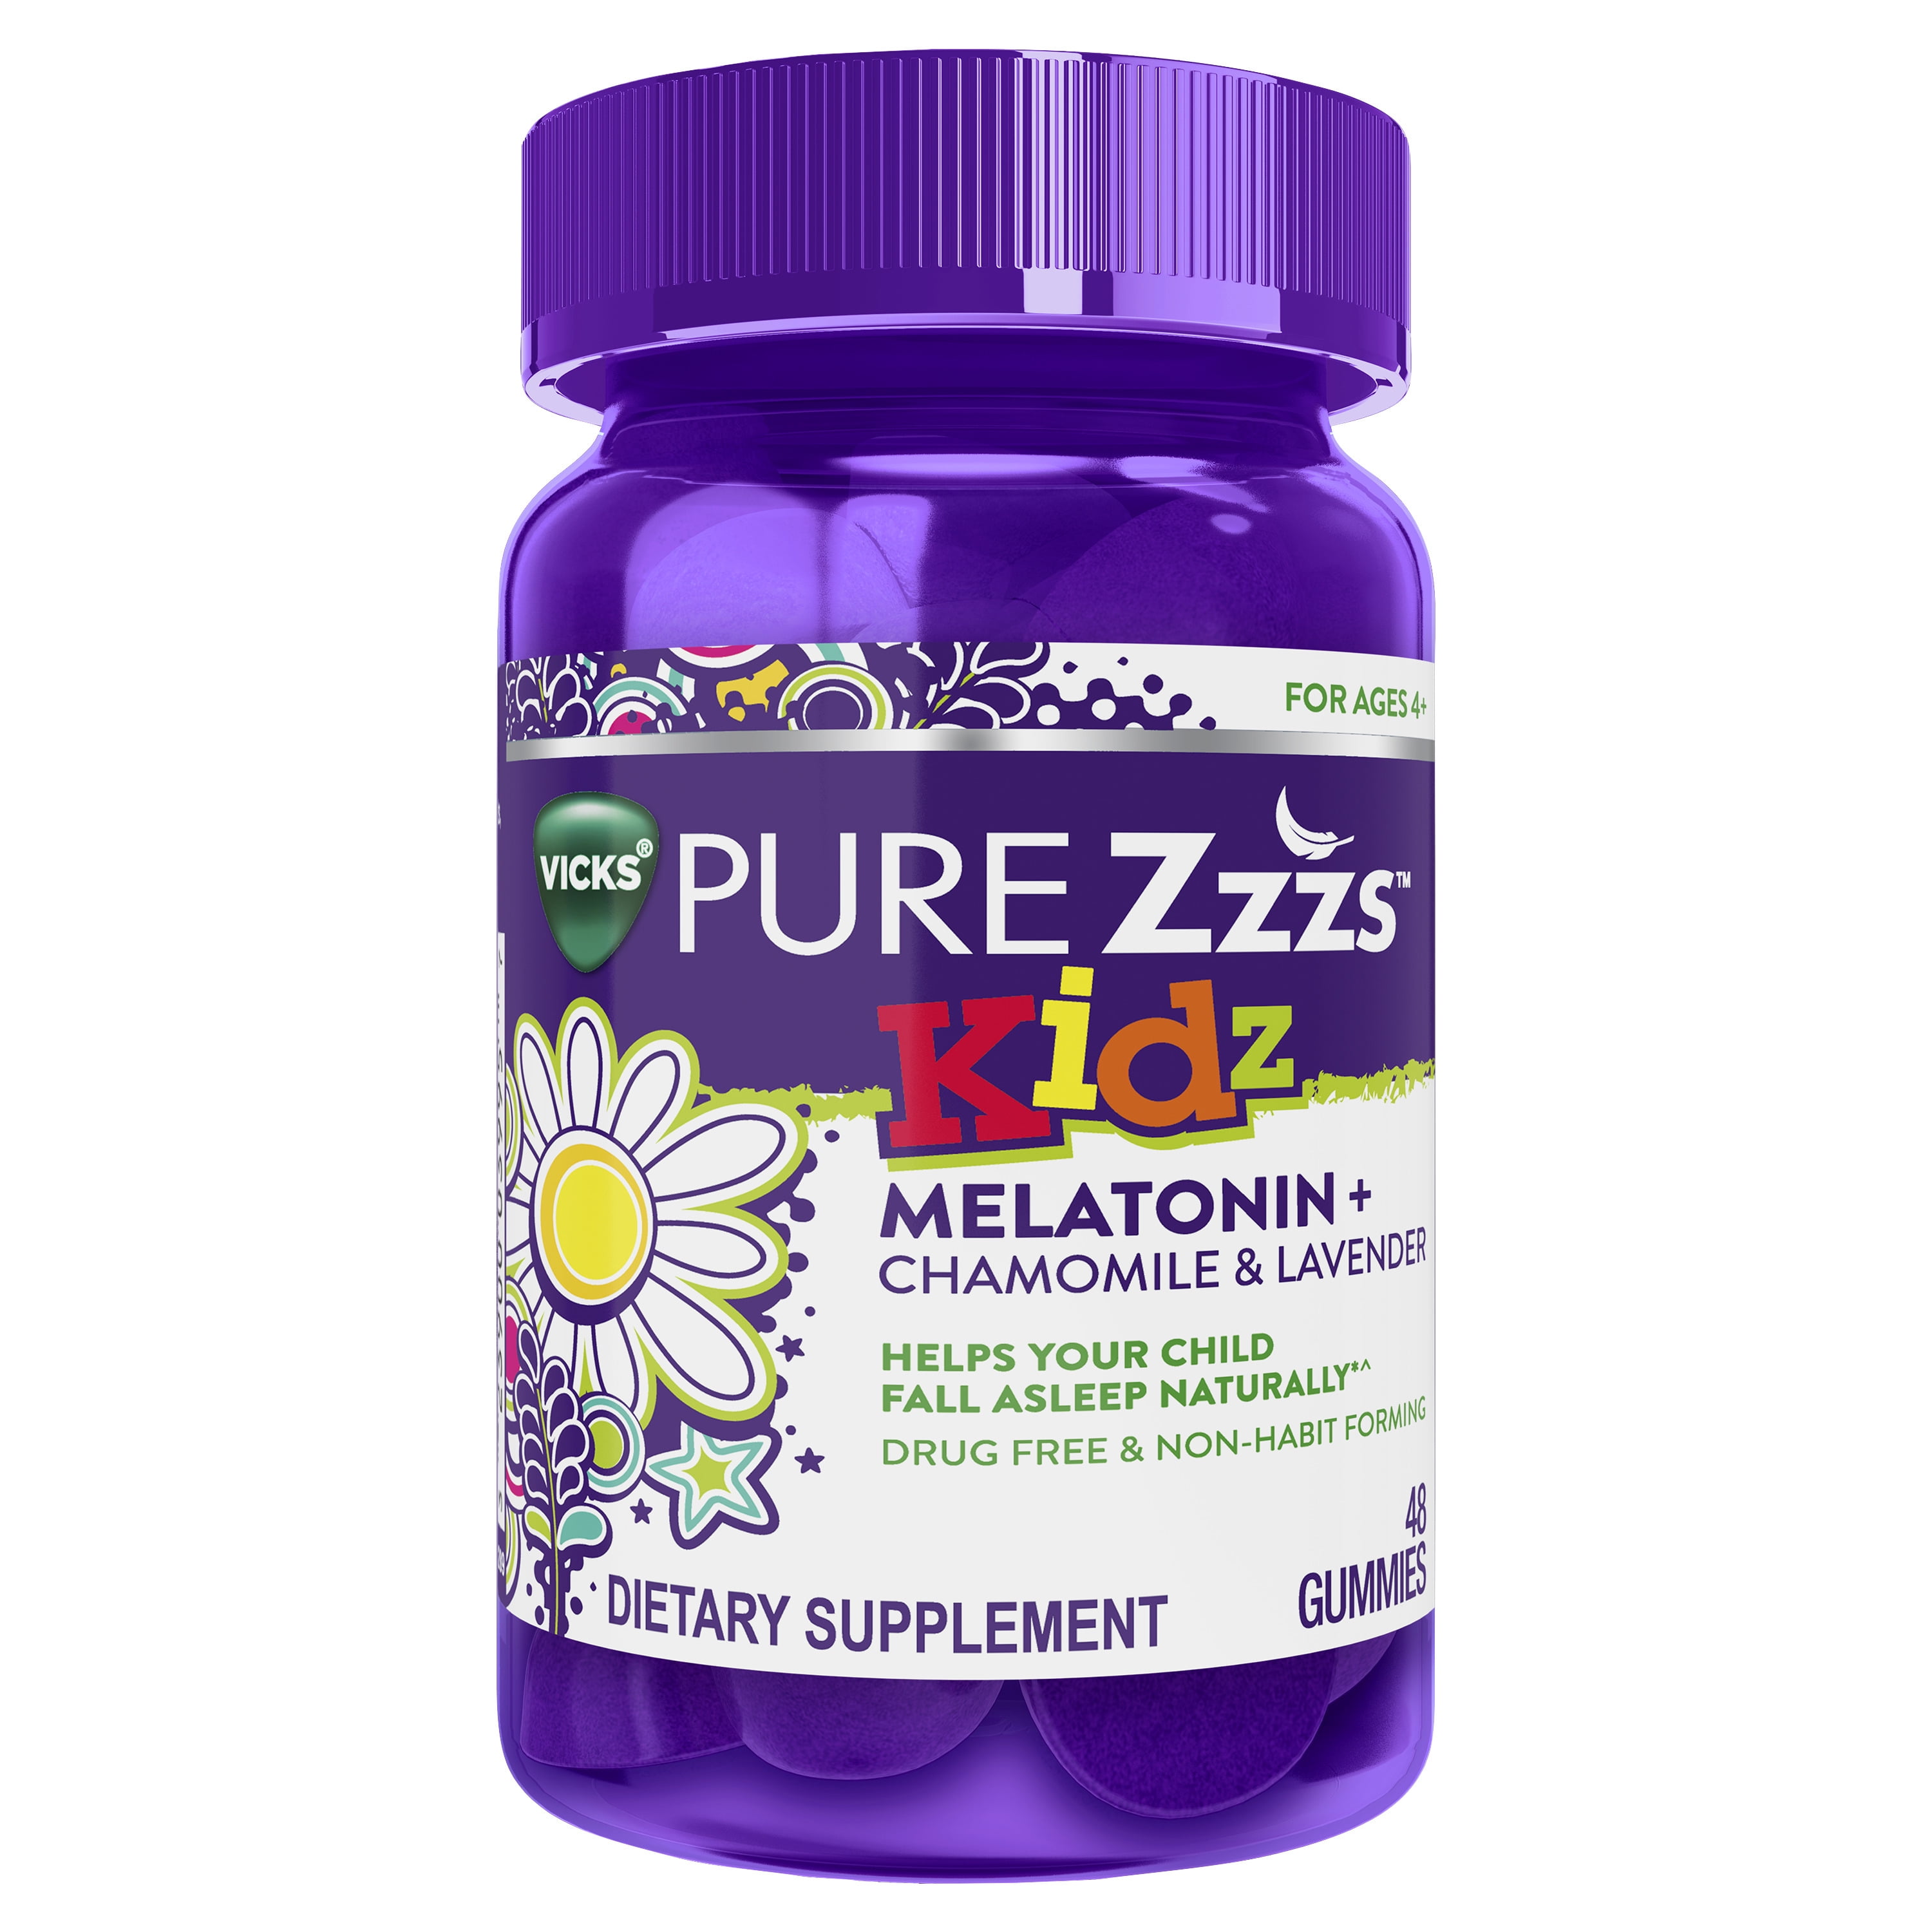 Vicks Pure Zzzs Kidz Sleep Aid Gummies, 0.5mg Melatonin per gummy, Dietary Supplement for Ages 4+, 48 Ct